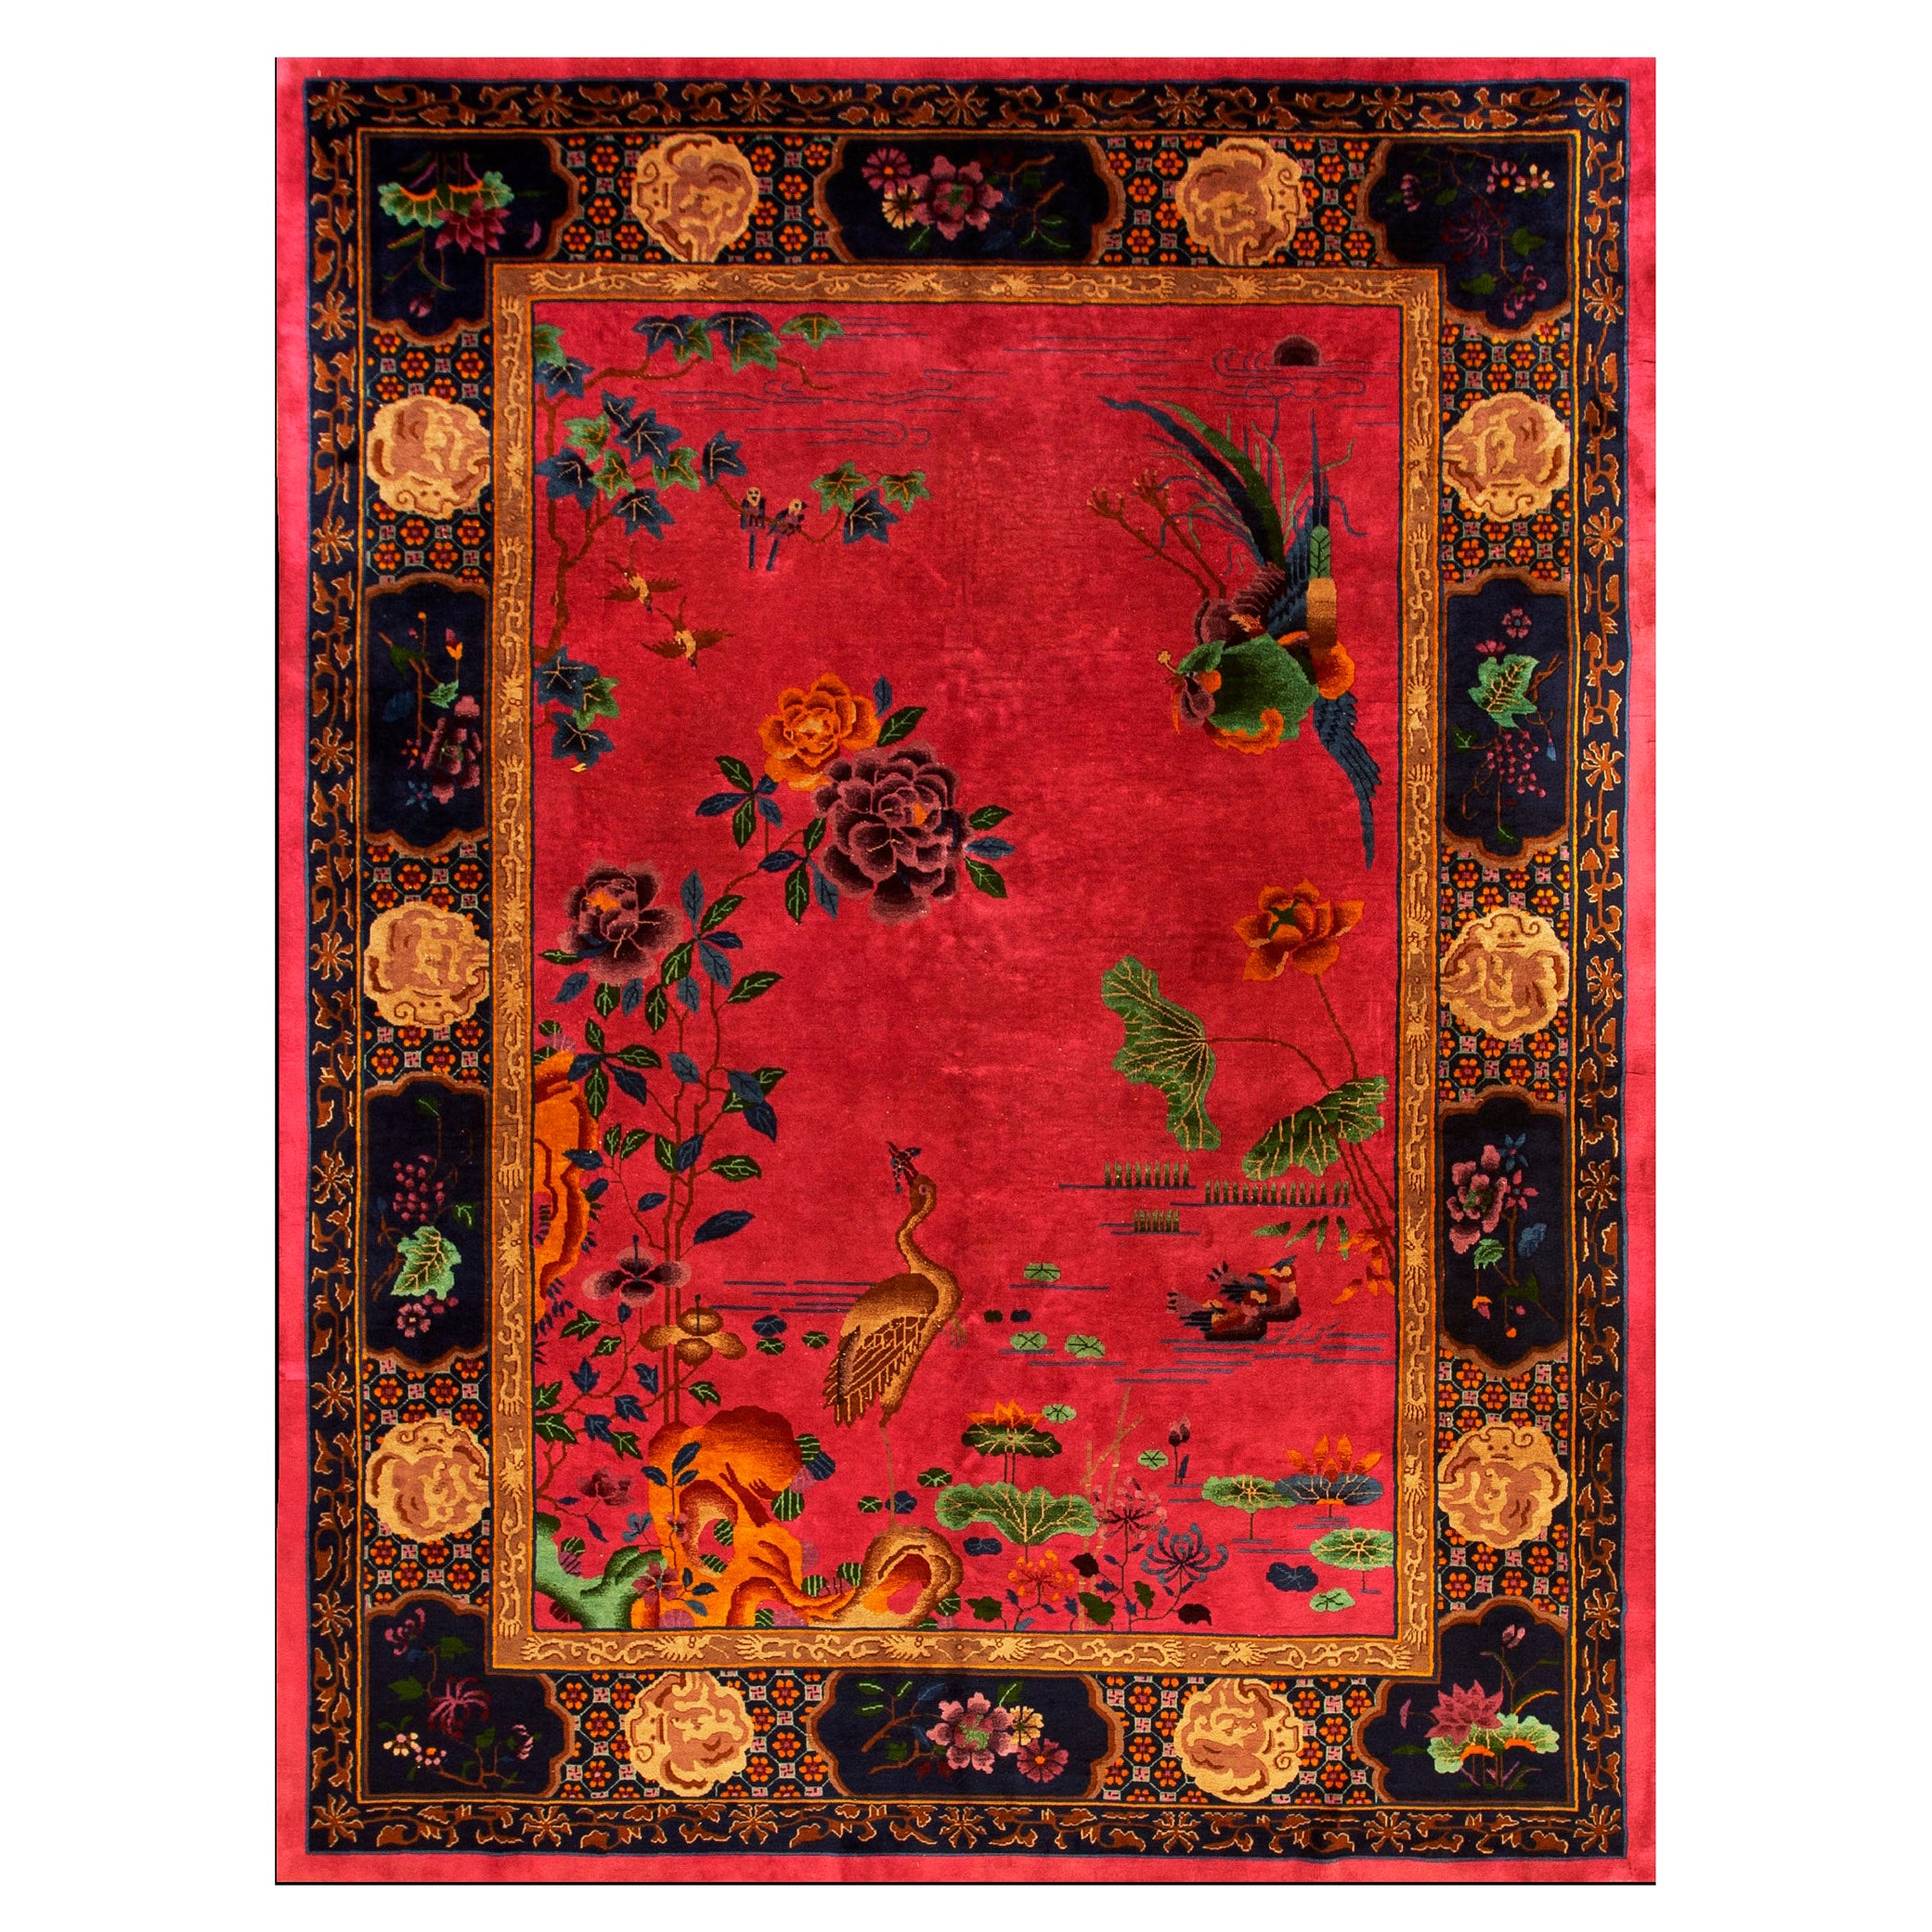 1920s Chinese Art Deco Carpet ( 8' 9" x 11' 8" - 266x 355 cm ) For Sale